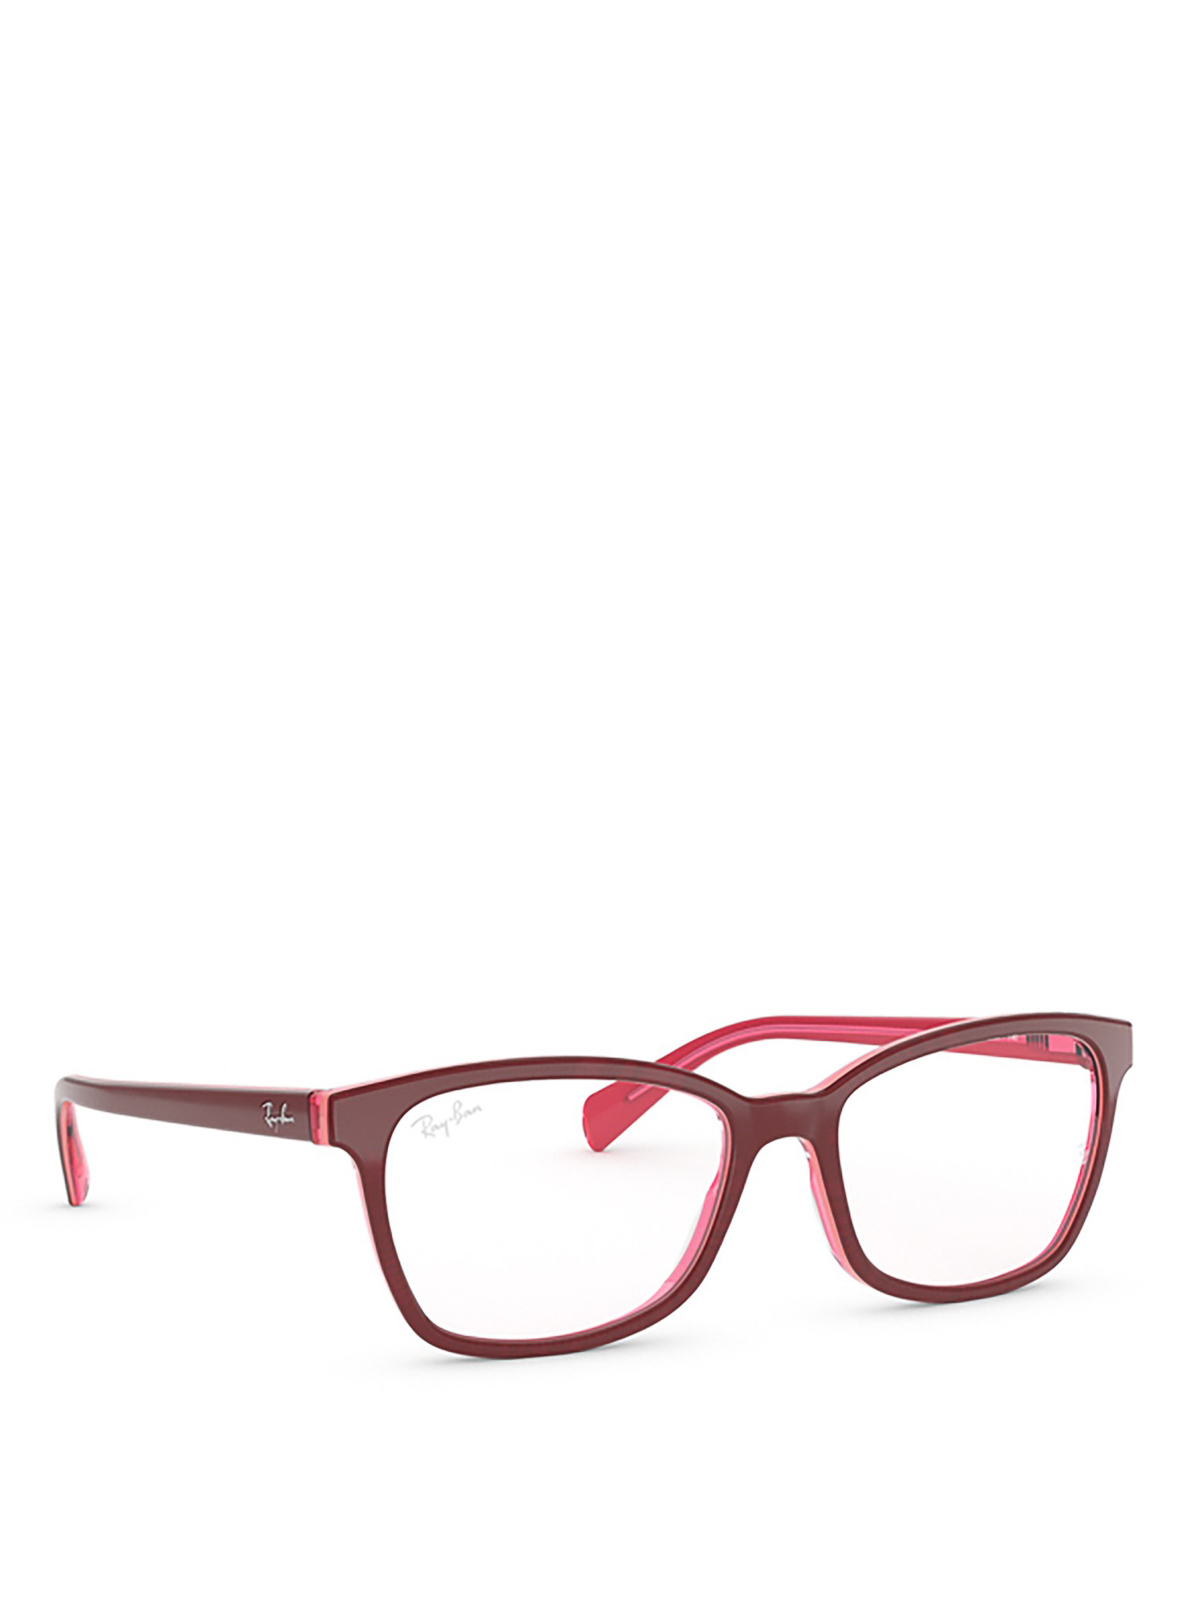 Ray Ban - Red square frame eyeglasses 